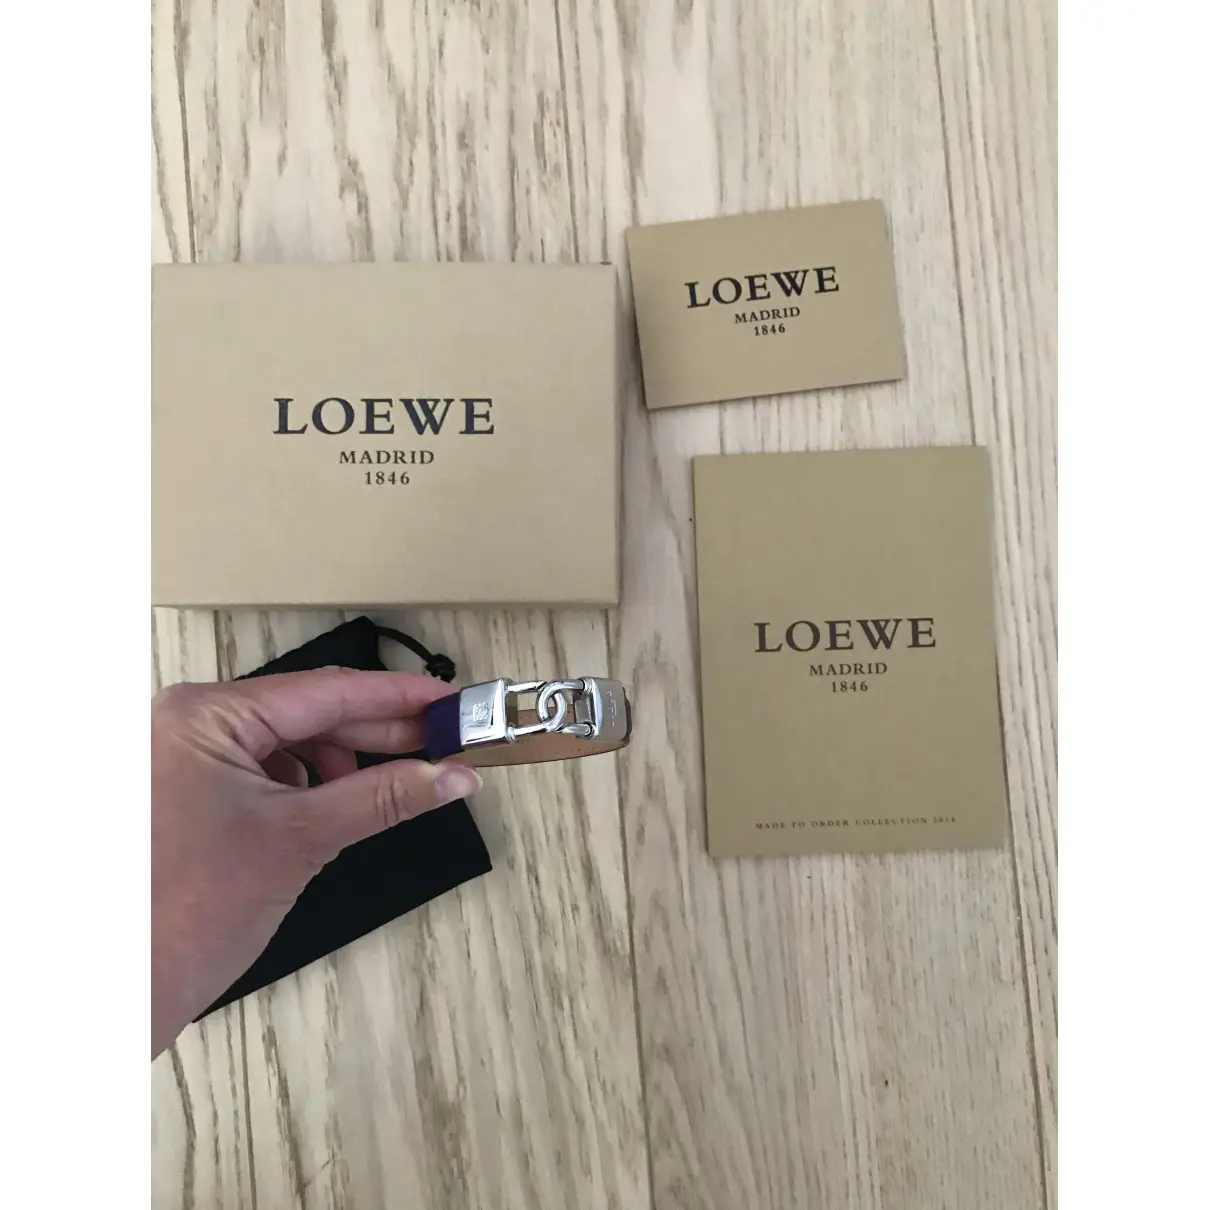 Loewe Leather bracelet for sale